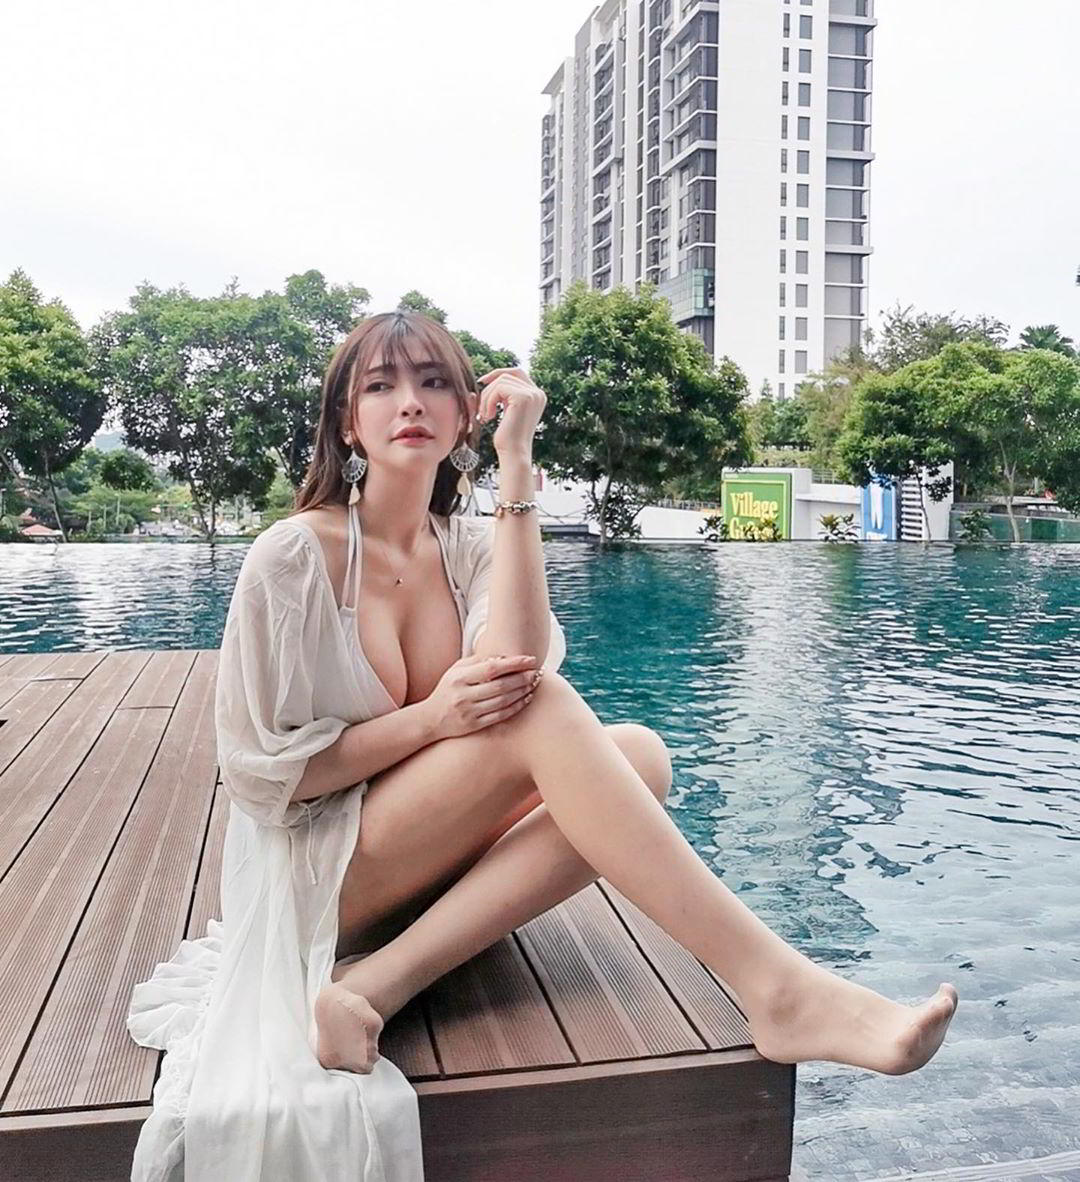 Malaysian Beauty Girl Victoria Aikyen So Hot